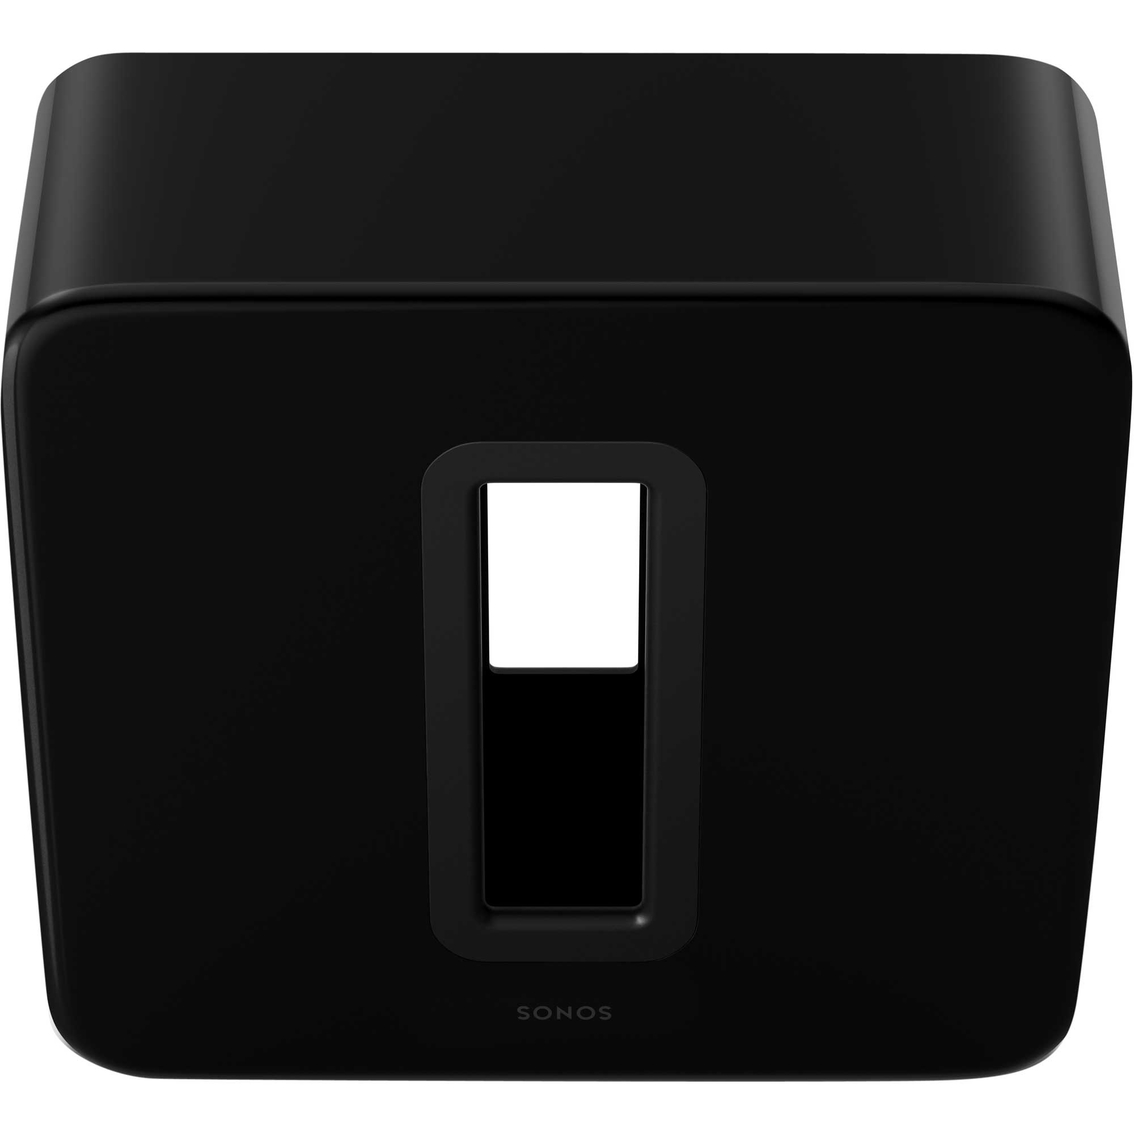 Sonos Sub Wireless Subwoofer - Image 5 of 8